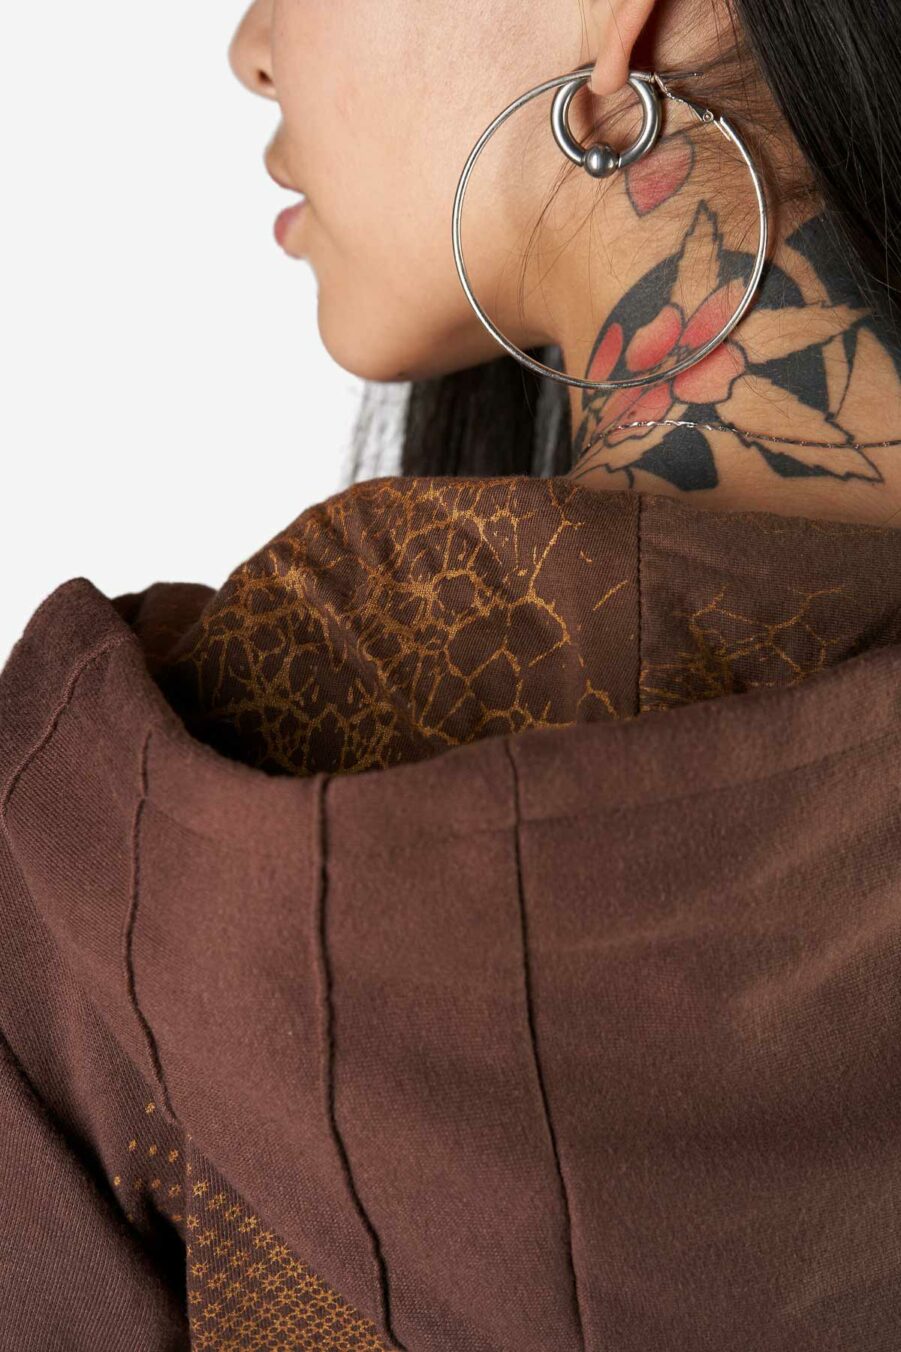 zola-thora-hoodie-brown-for-women-with-handmade-screen-print-alternative-streetwear-and-festival-fashion-avanyah